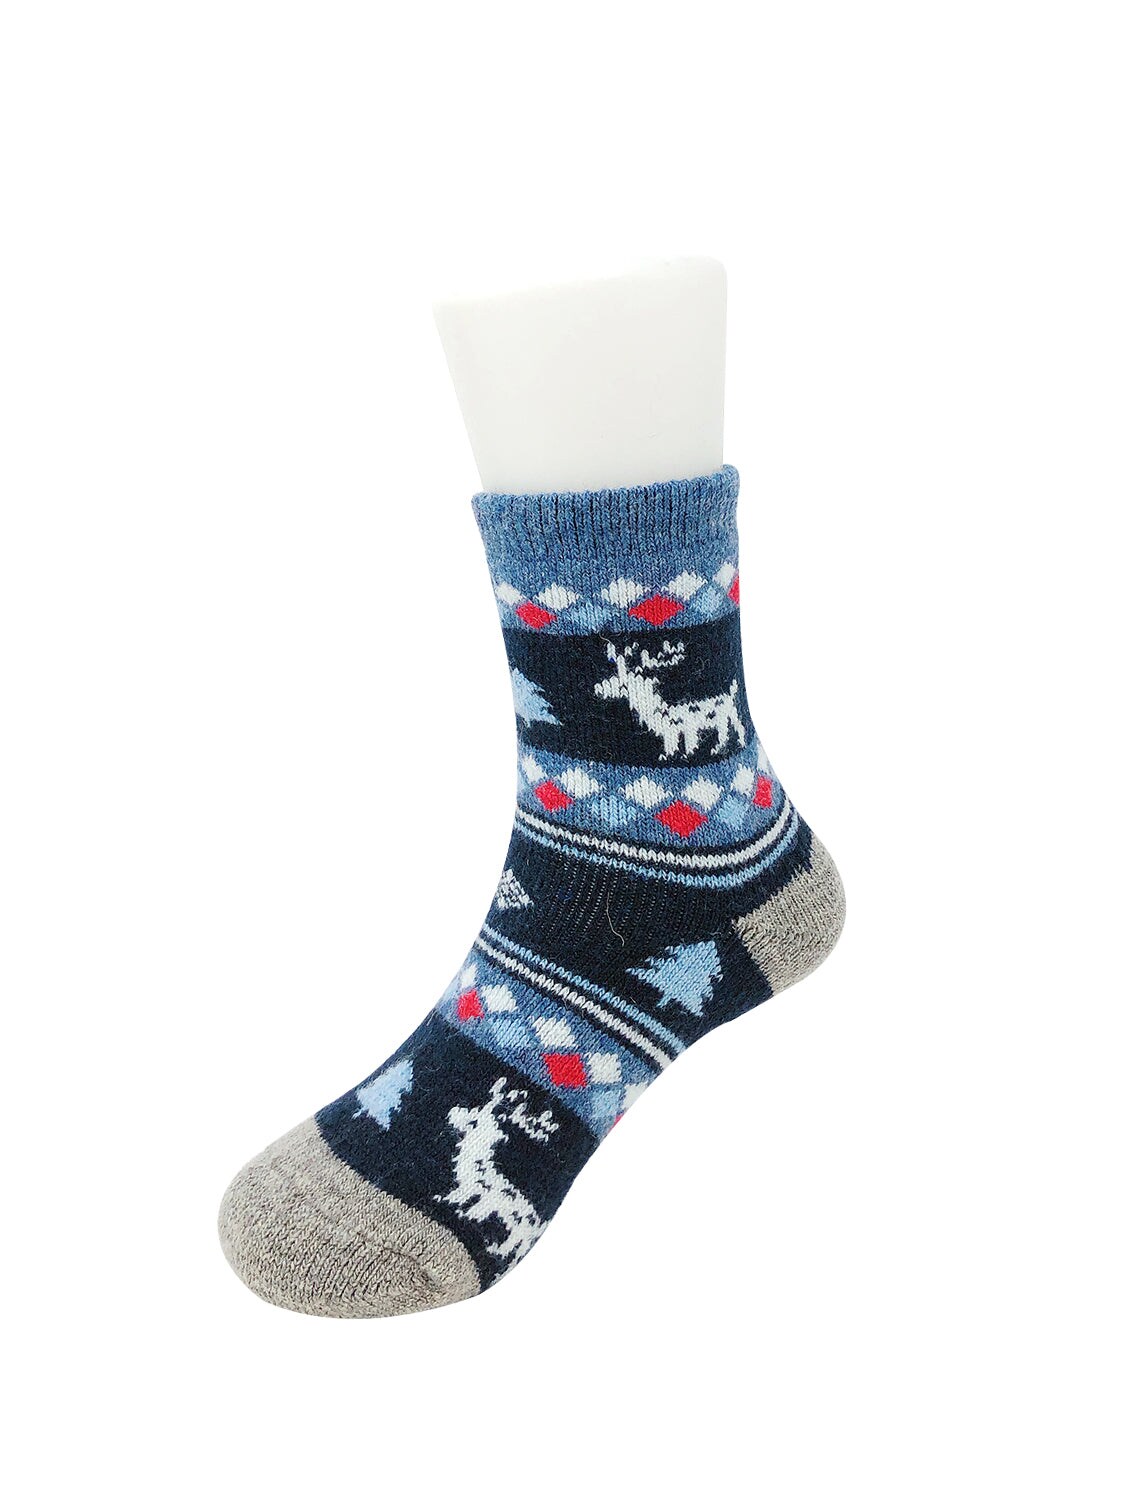 Wrapables Children&#x27;s Thick Winter Warm Wool Socks (Set of 6), Christmas Reindeer / Medium